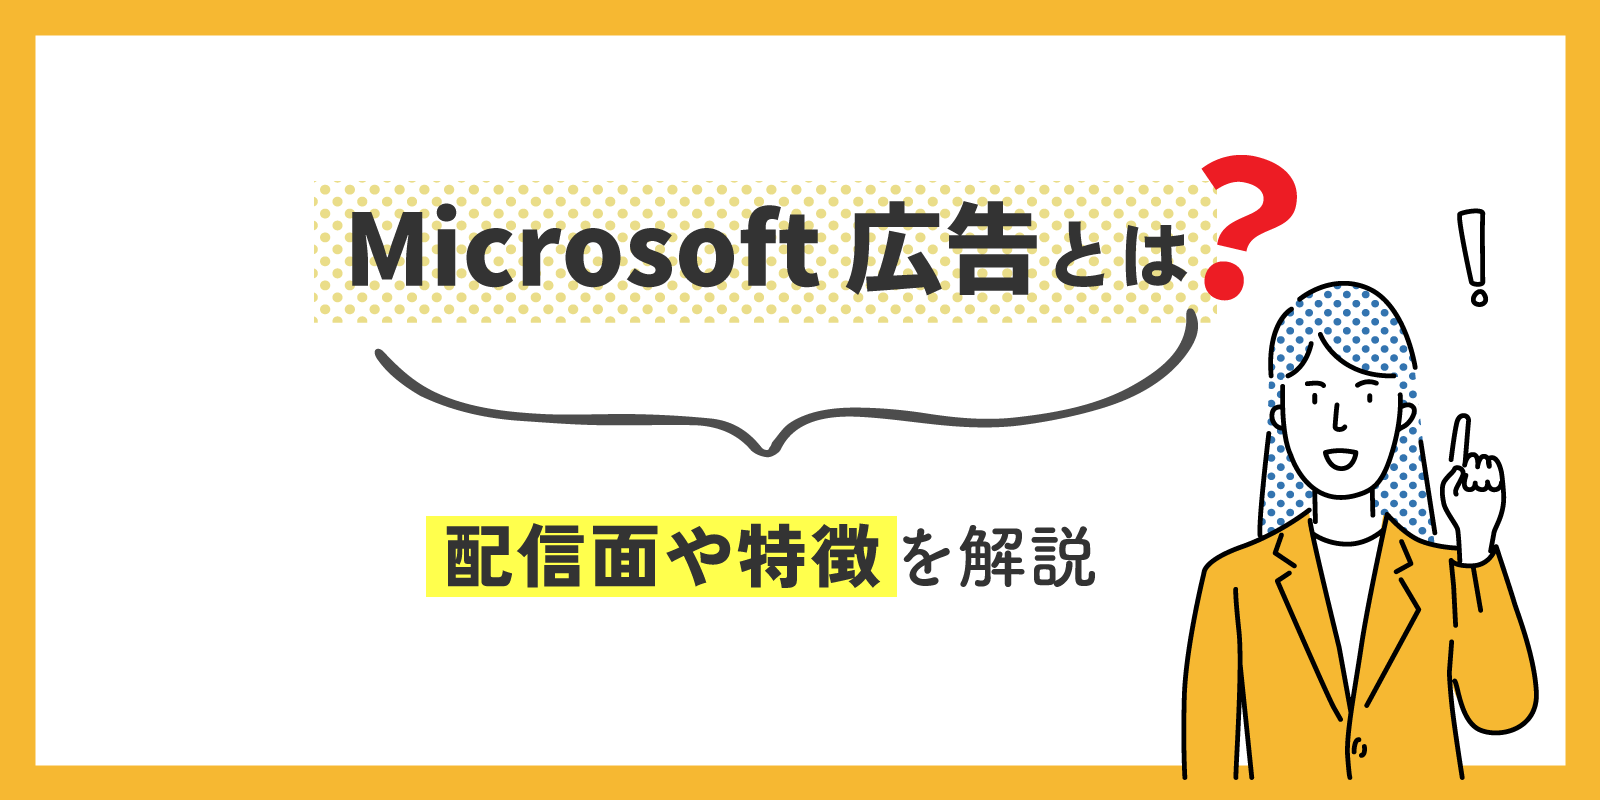 Microsoft 広告とは？配信面や特徴を解説 - 運用型広告 Unyoo.jp